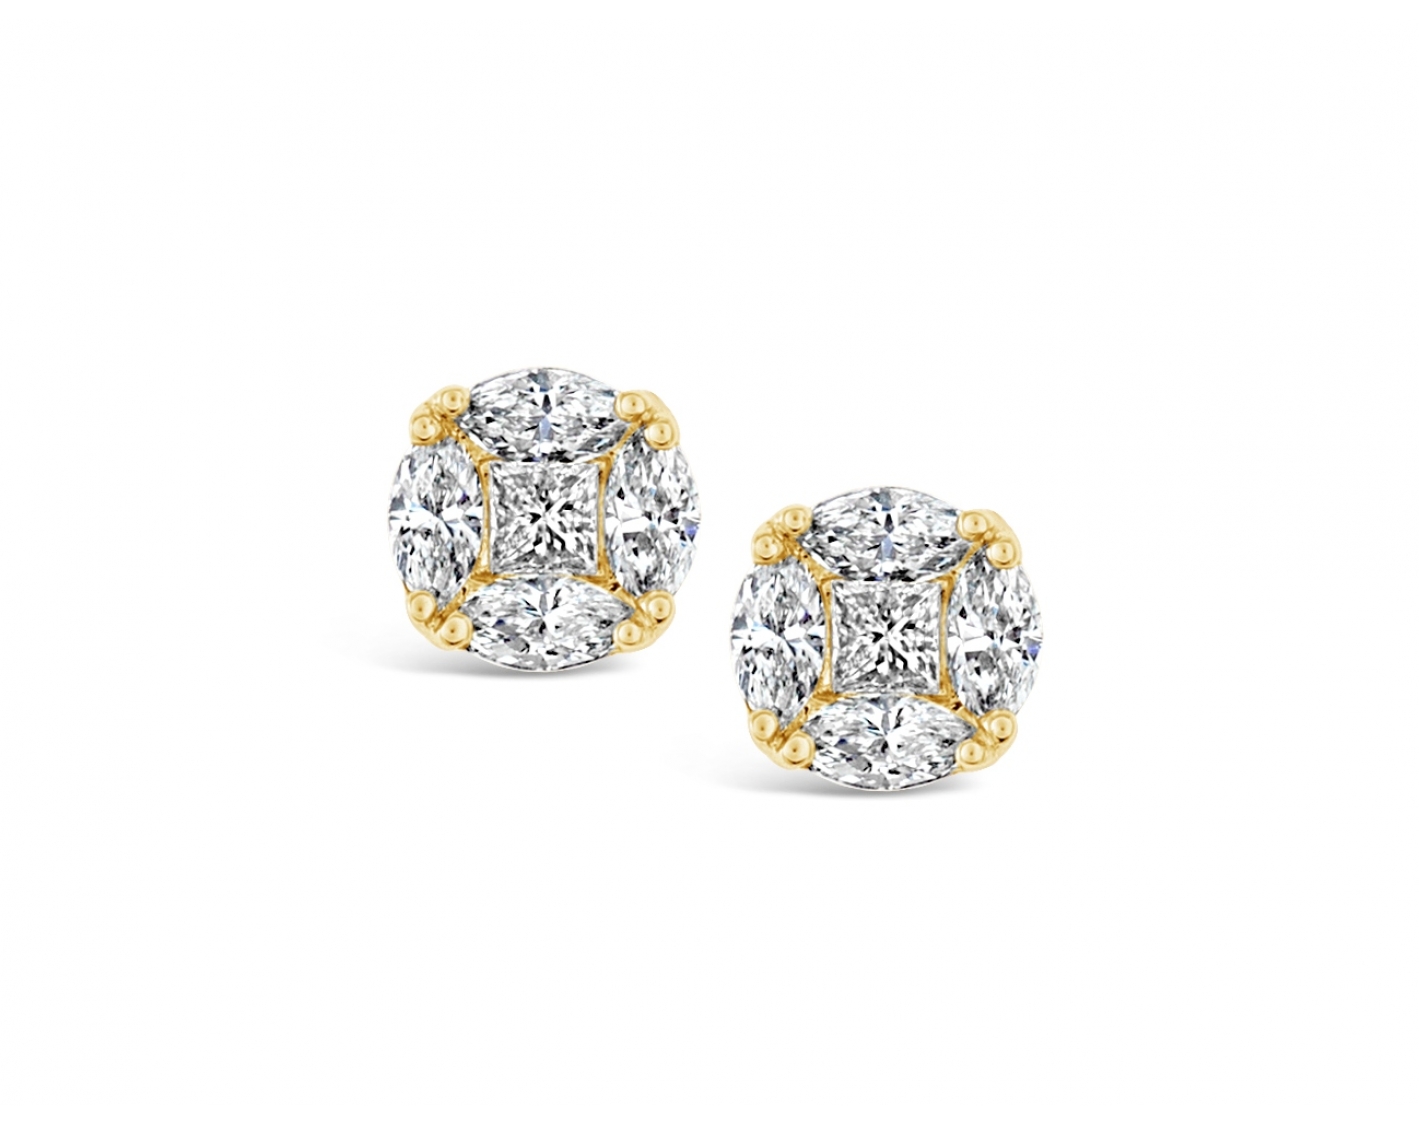 18k yellow gold illusion set stud earrings with princess & marquises diamonds